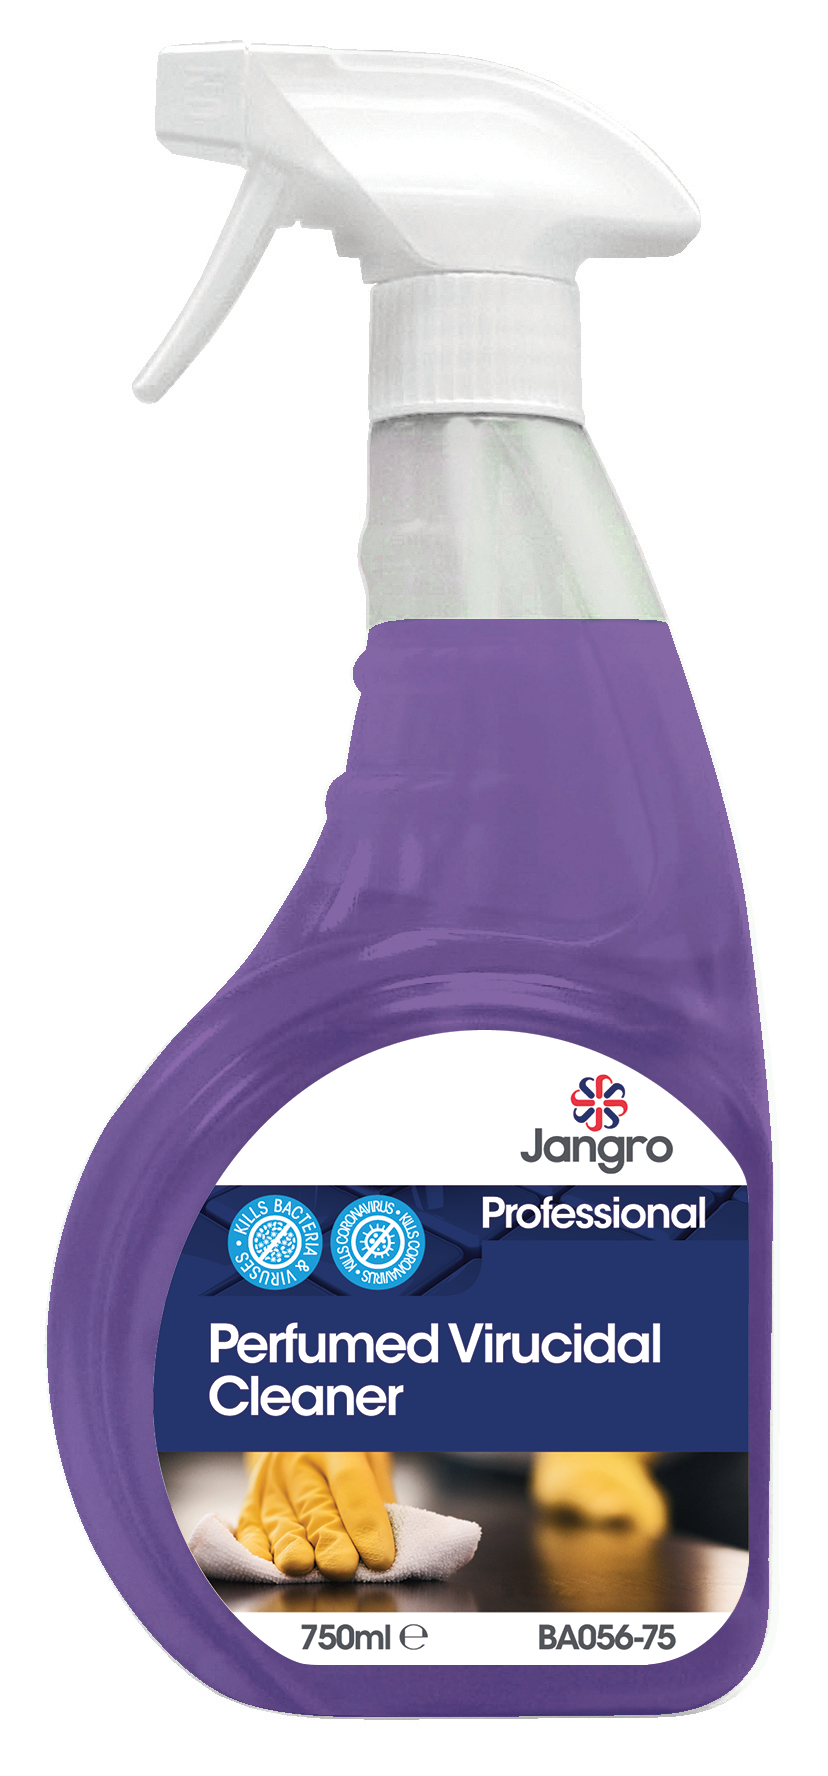 Jangro Professional Perfumed Virucidal Cleaner, 750ml - 0904-32C